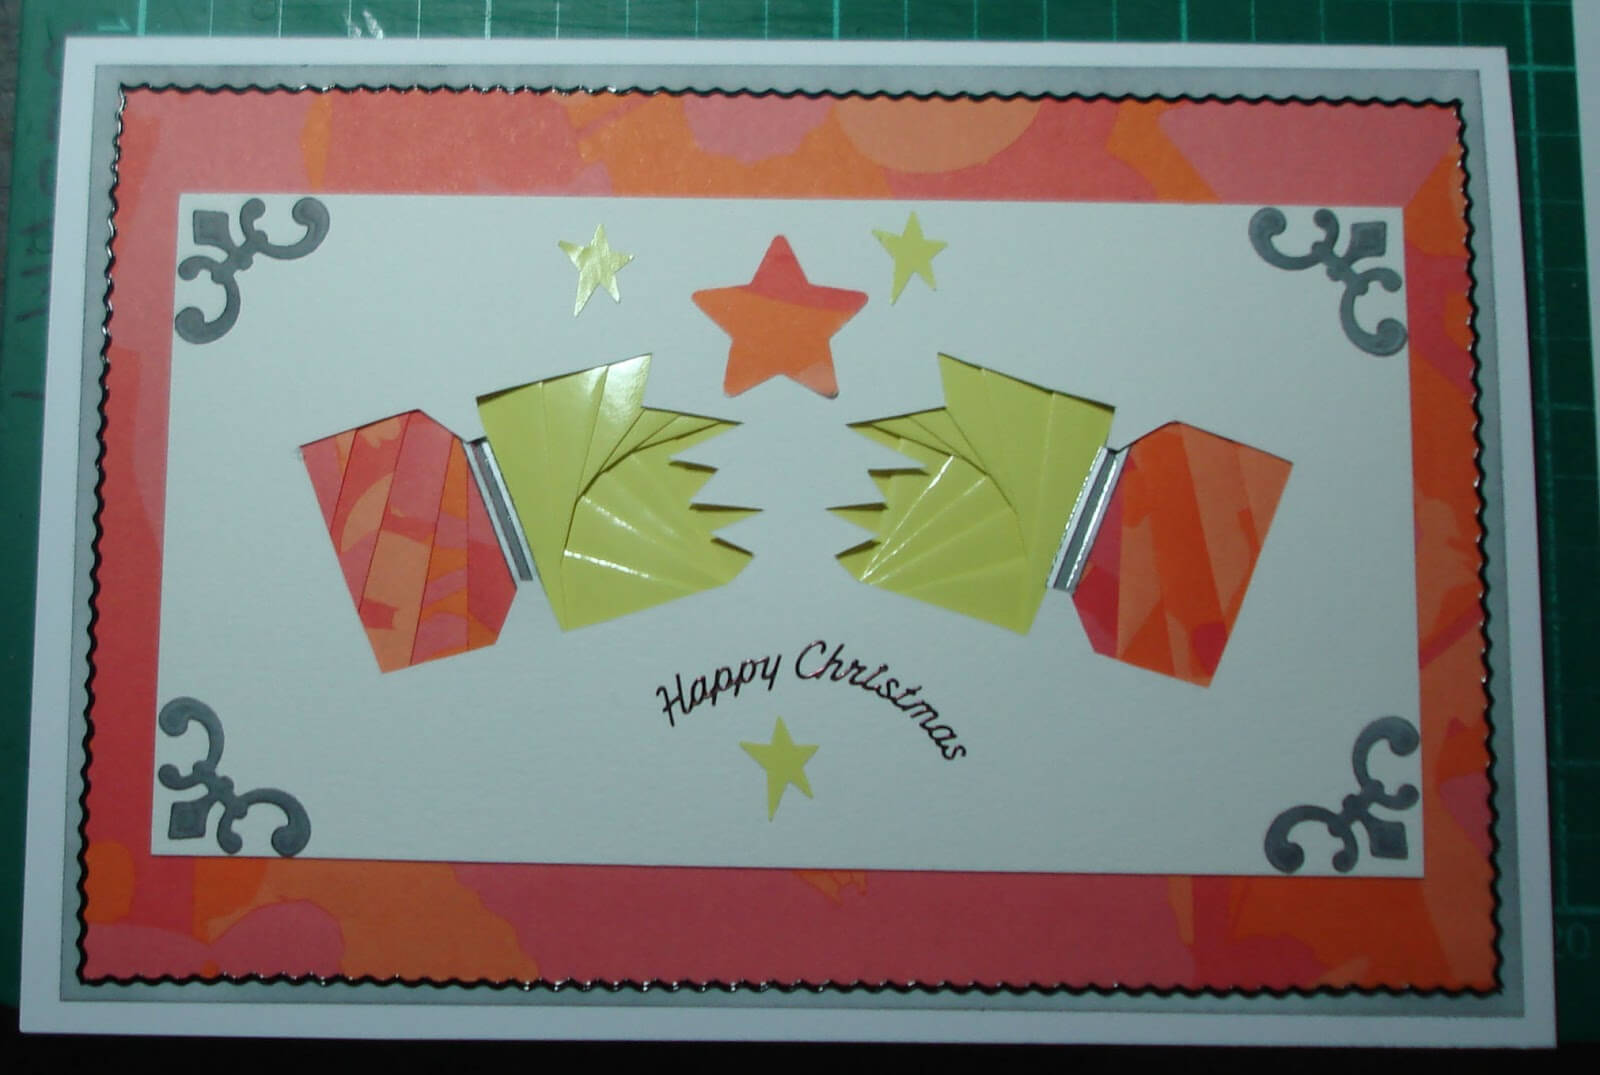 Lorraine Lives Here: Iris Folding Christmas Cracker Intended For Iris Folding Christmas Cards Templates